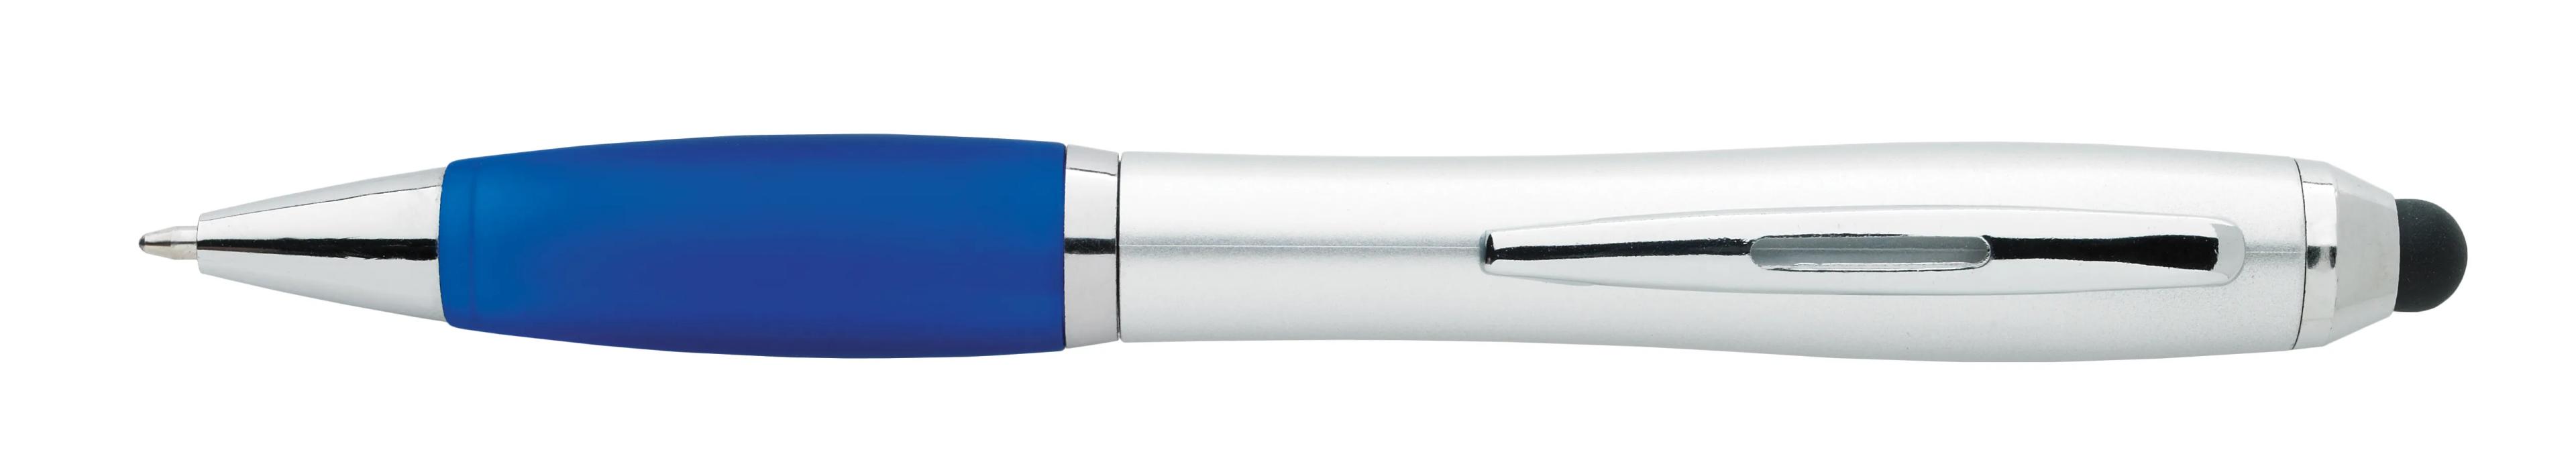 Ion Silver Stylus Pen 14 of 17